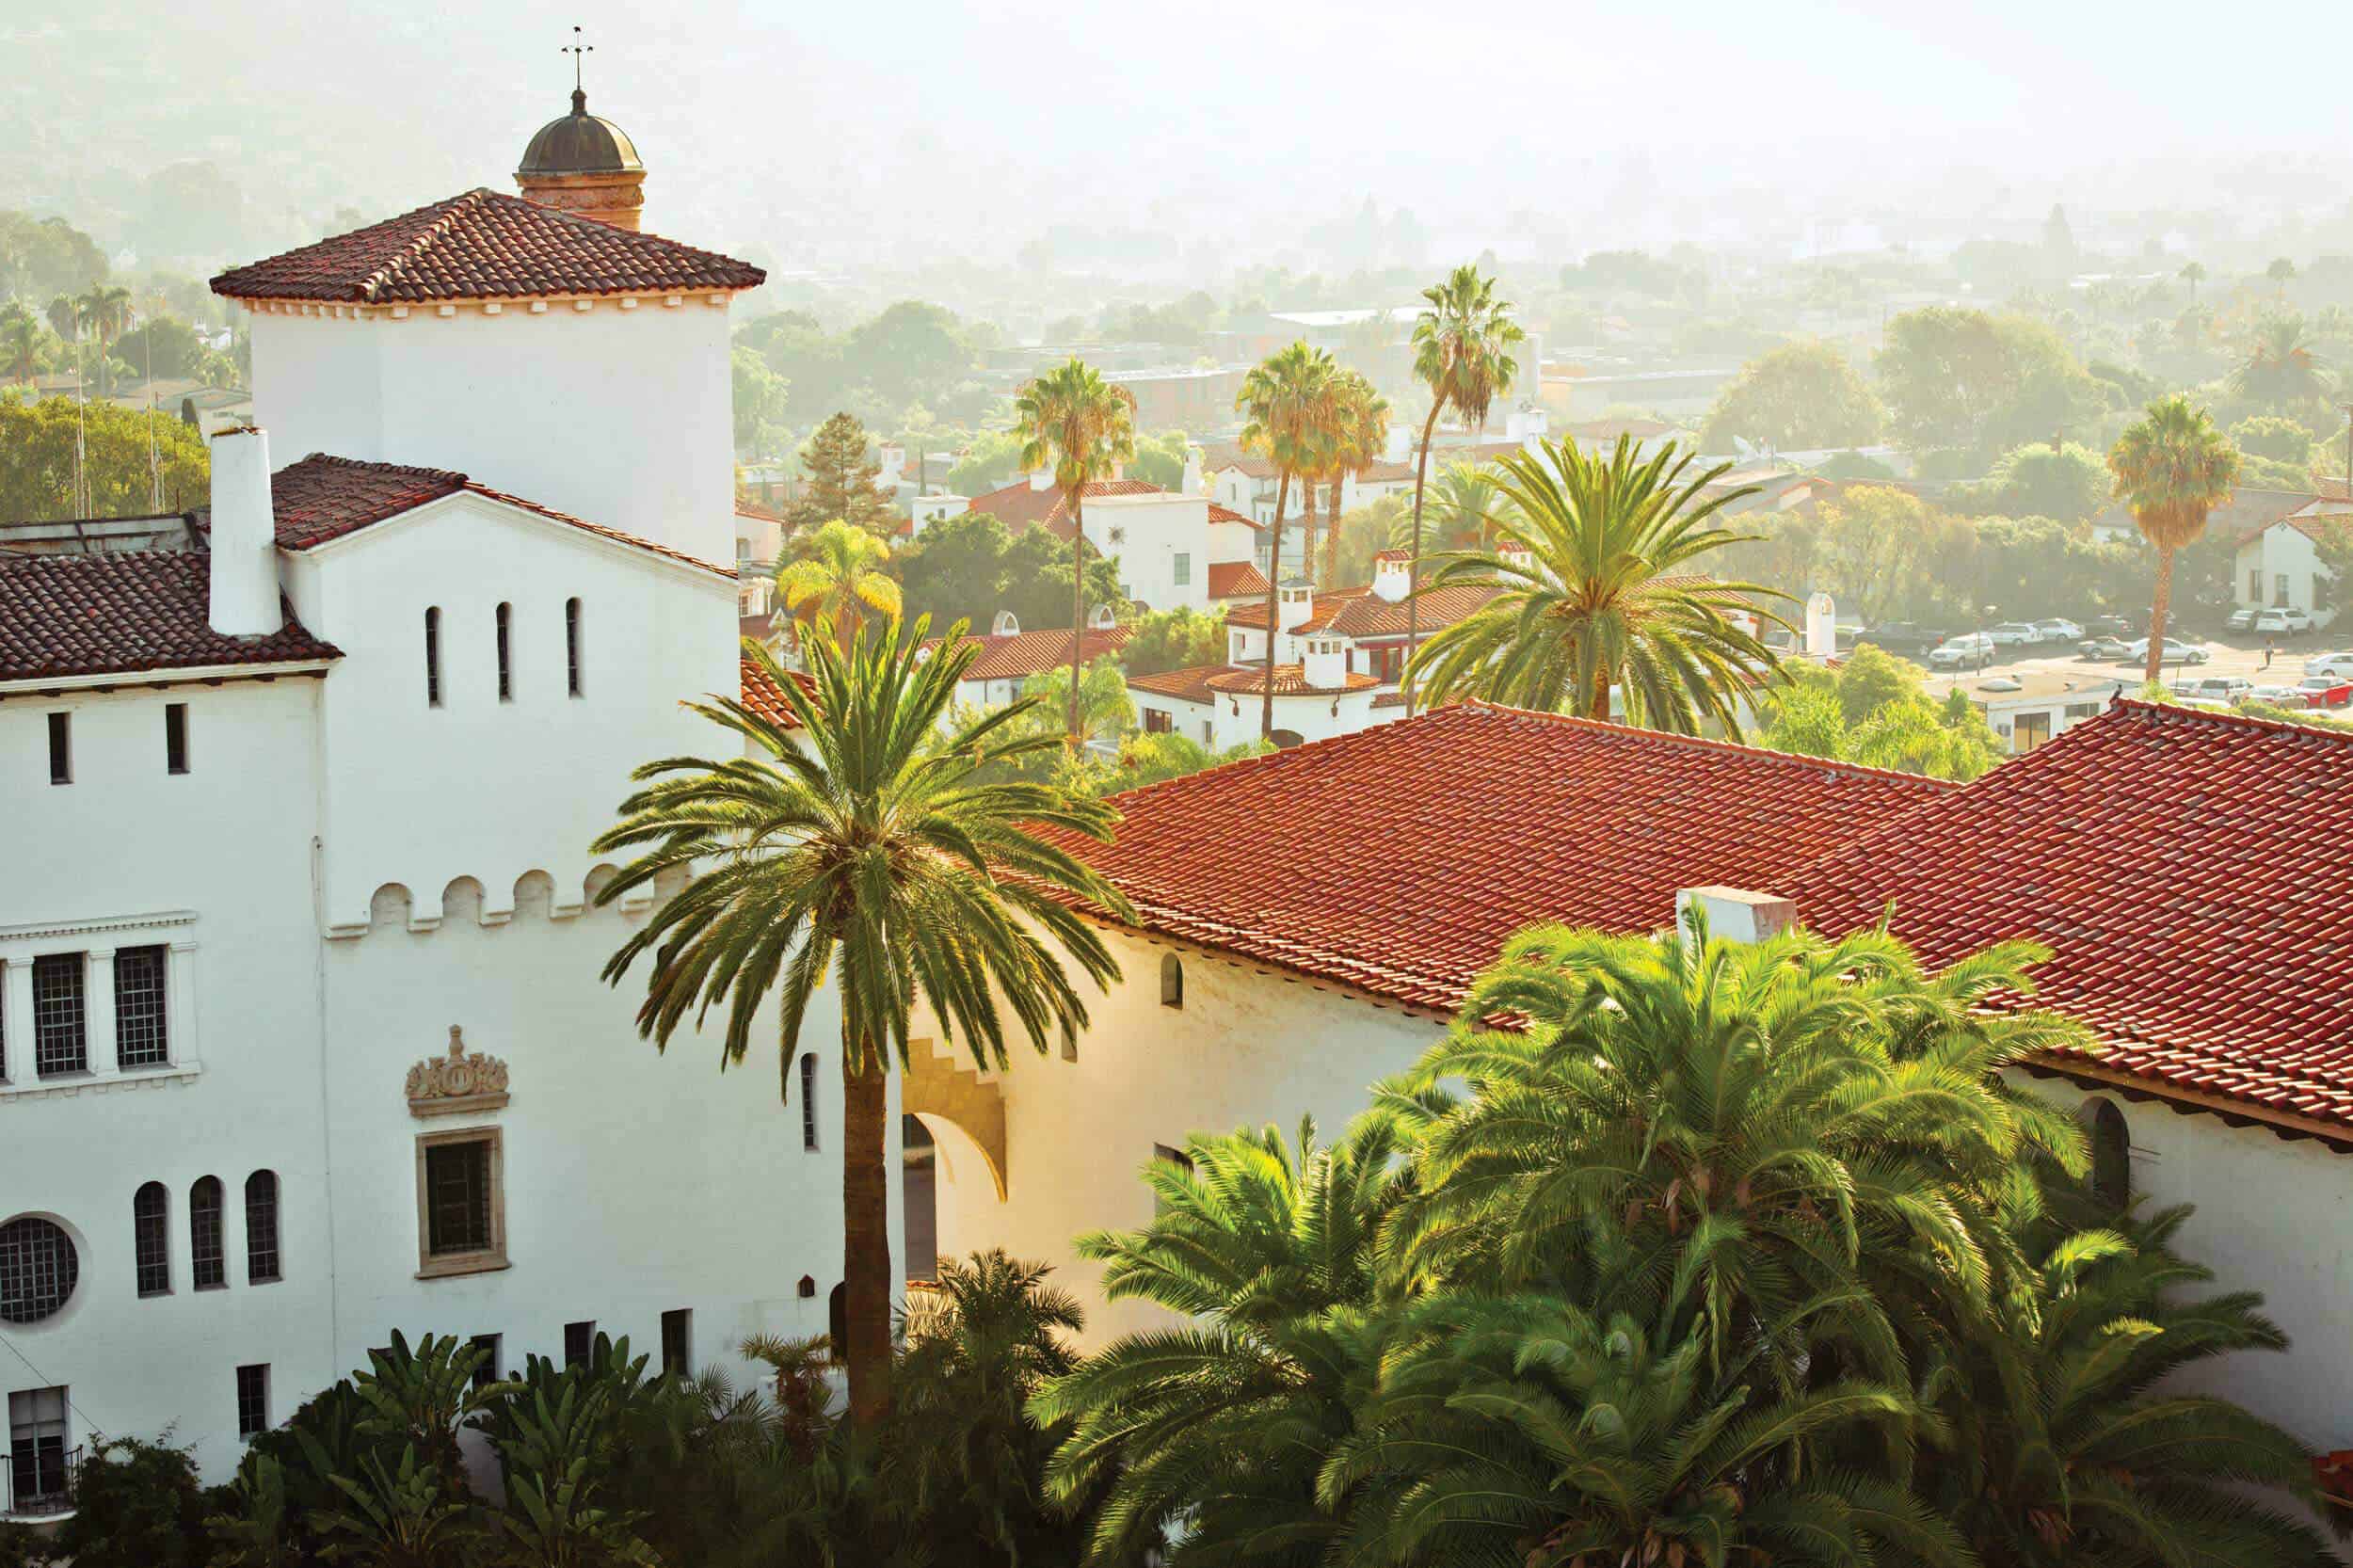 Miramar Lane, Short Term and Long Term Holiday Rental Properties, California, Santa Barbara, Montecito